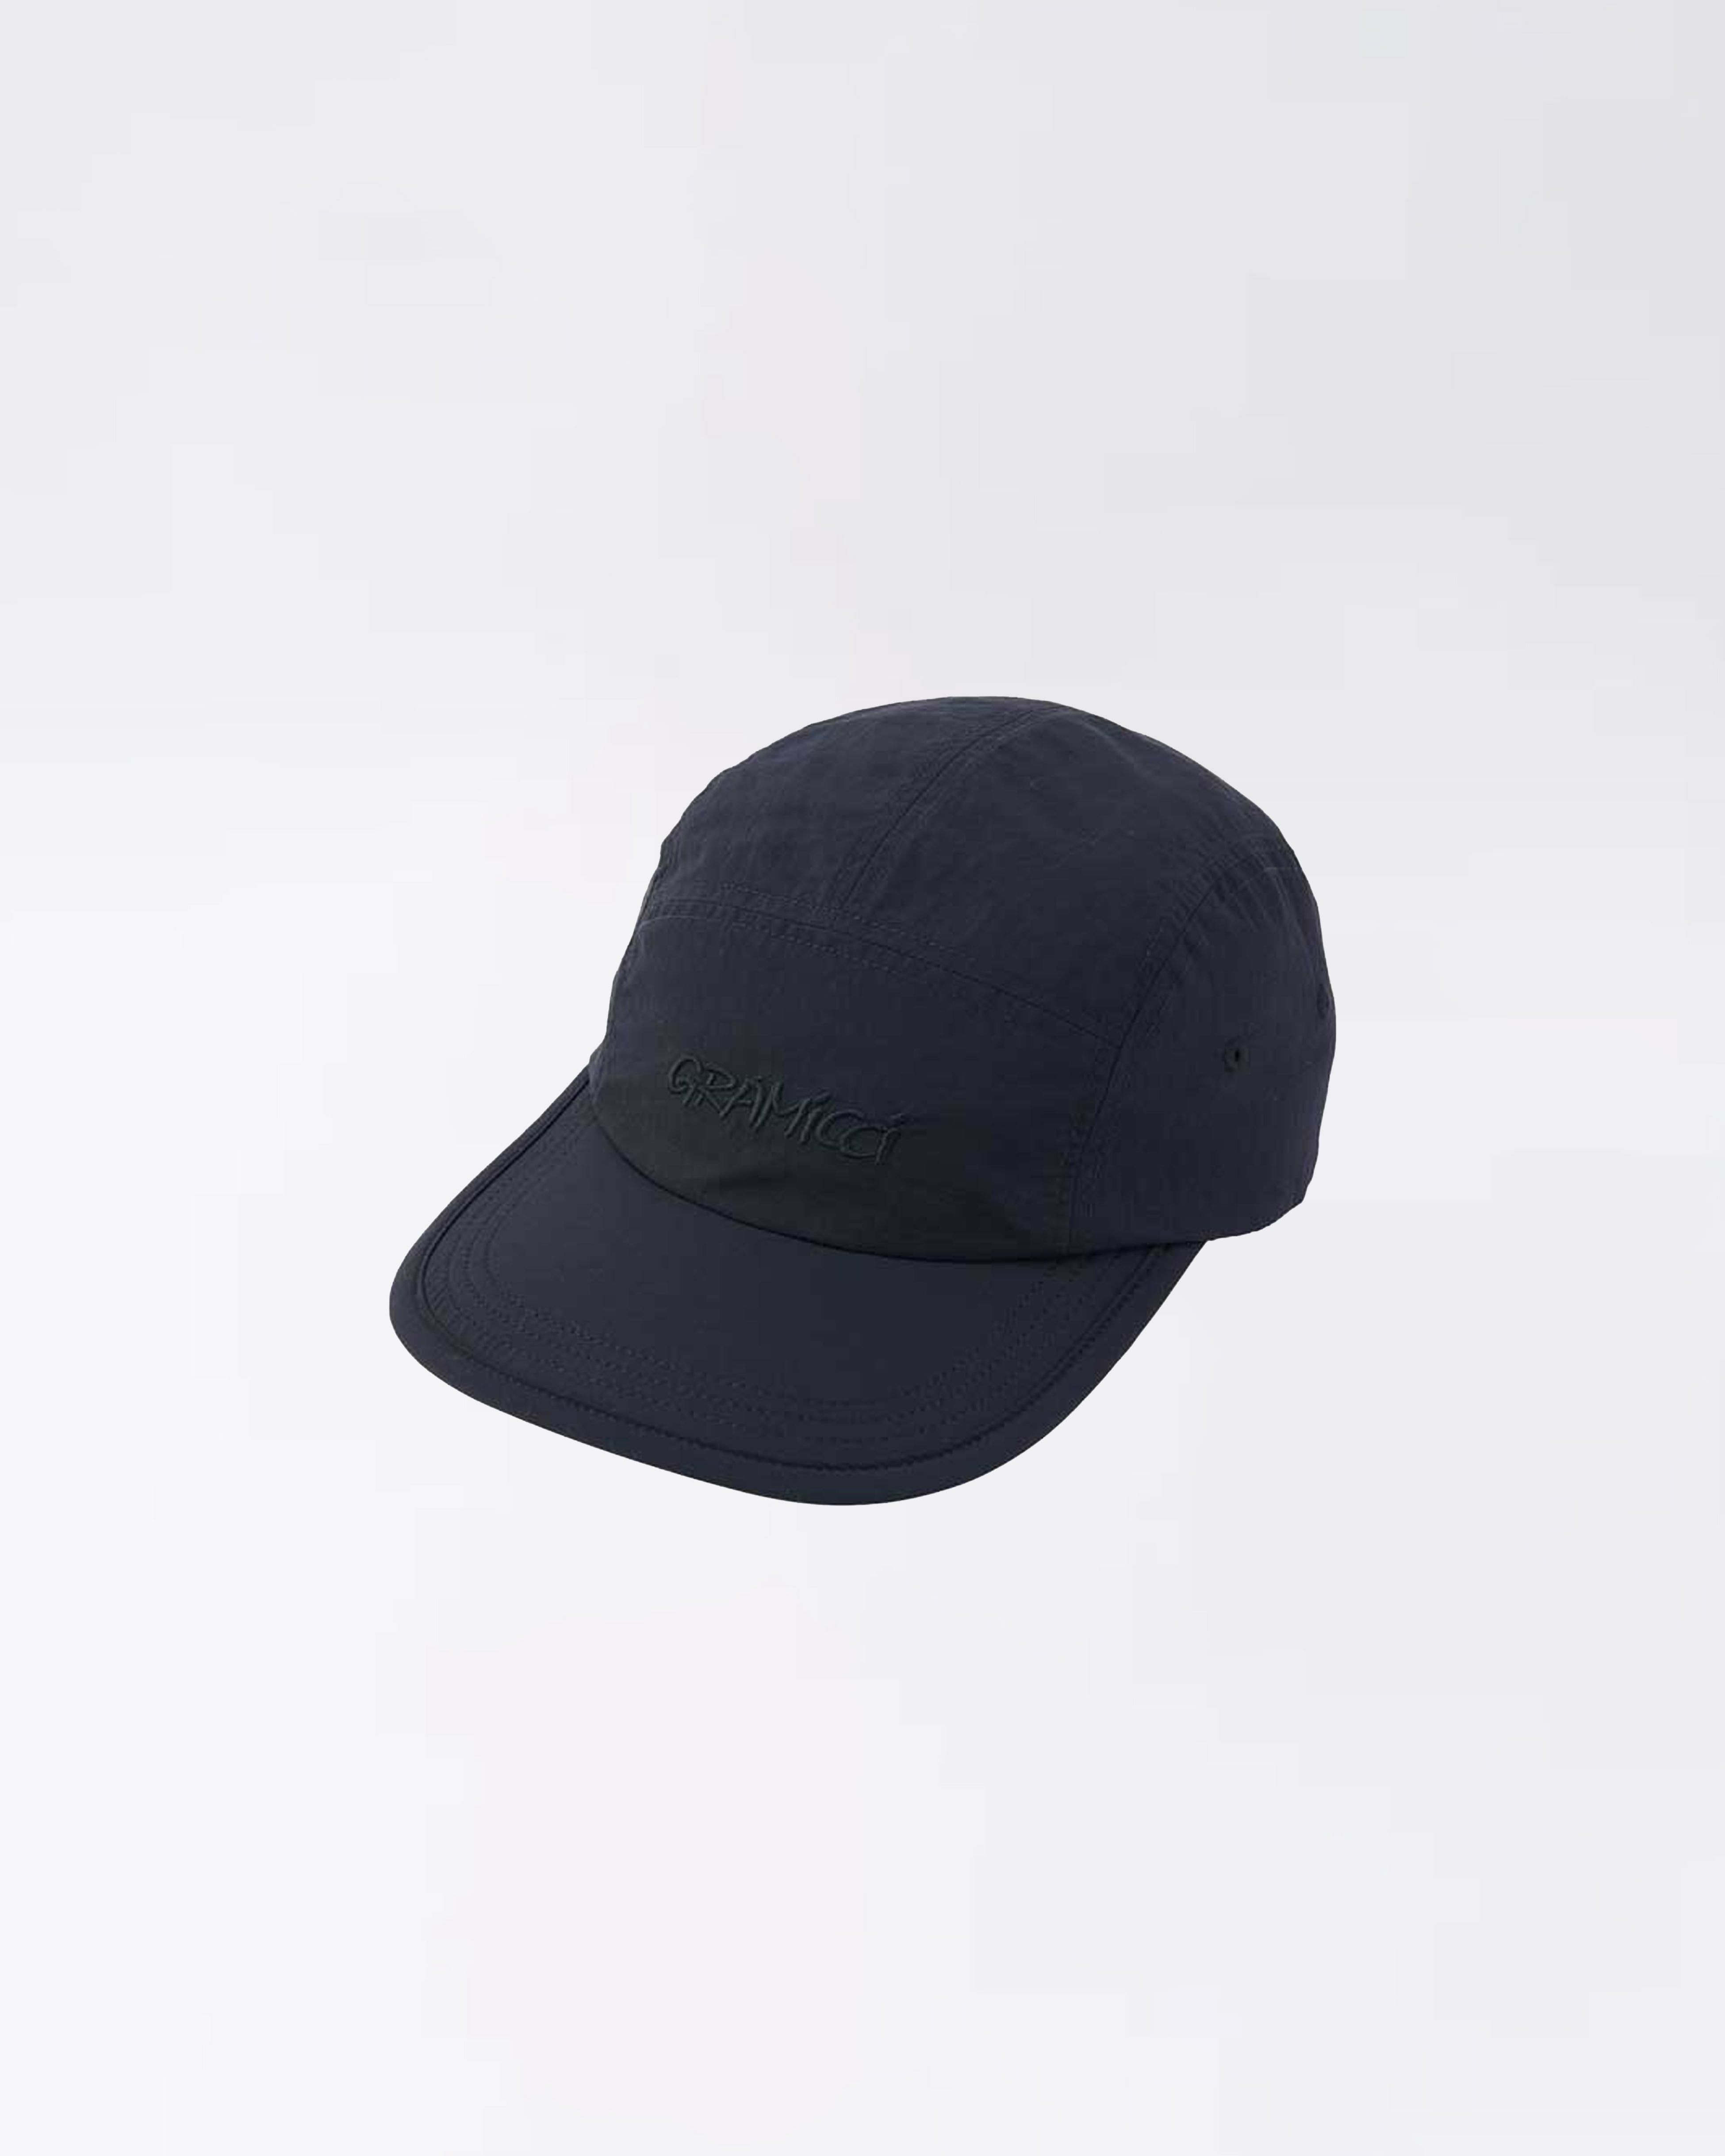 NYLON CAP BLACK